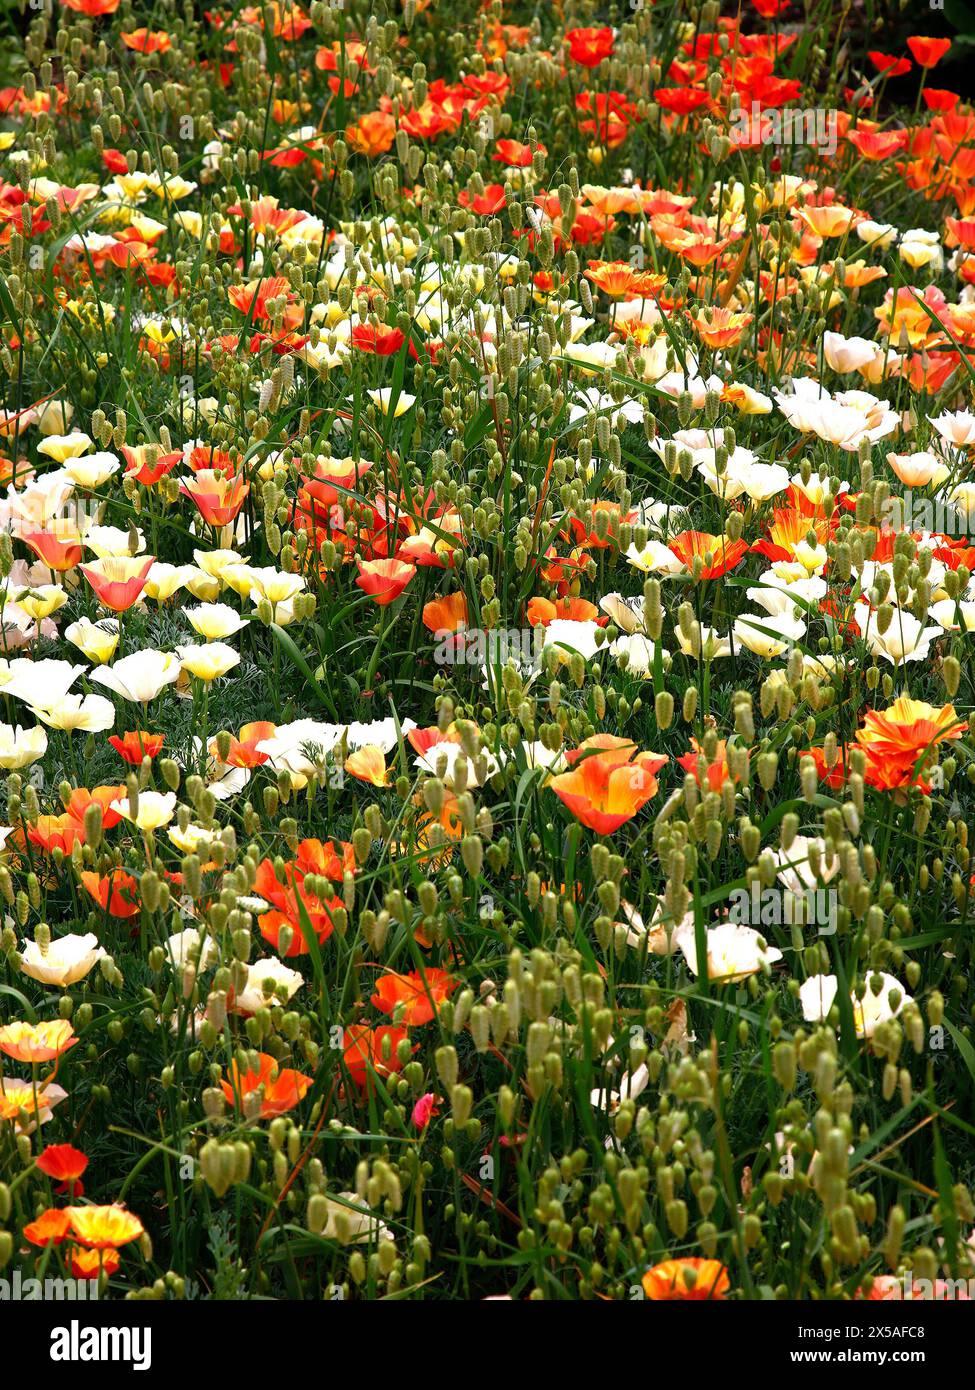 Closeup of the ornamental garden grass Briza maxima and different coloured eschscholzia californica creatin a wildflower meadow effect. Stock Photo